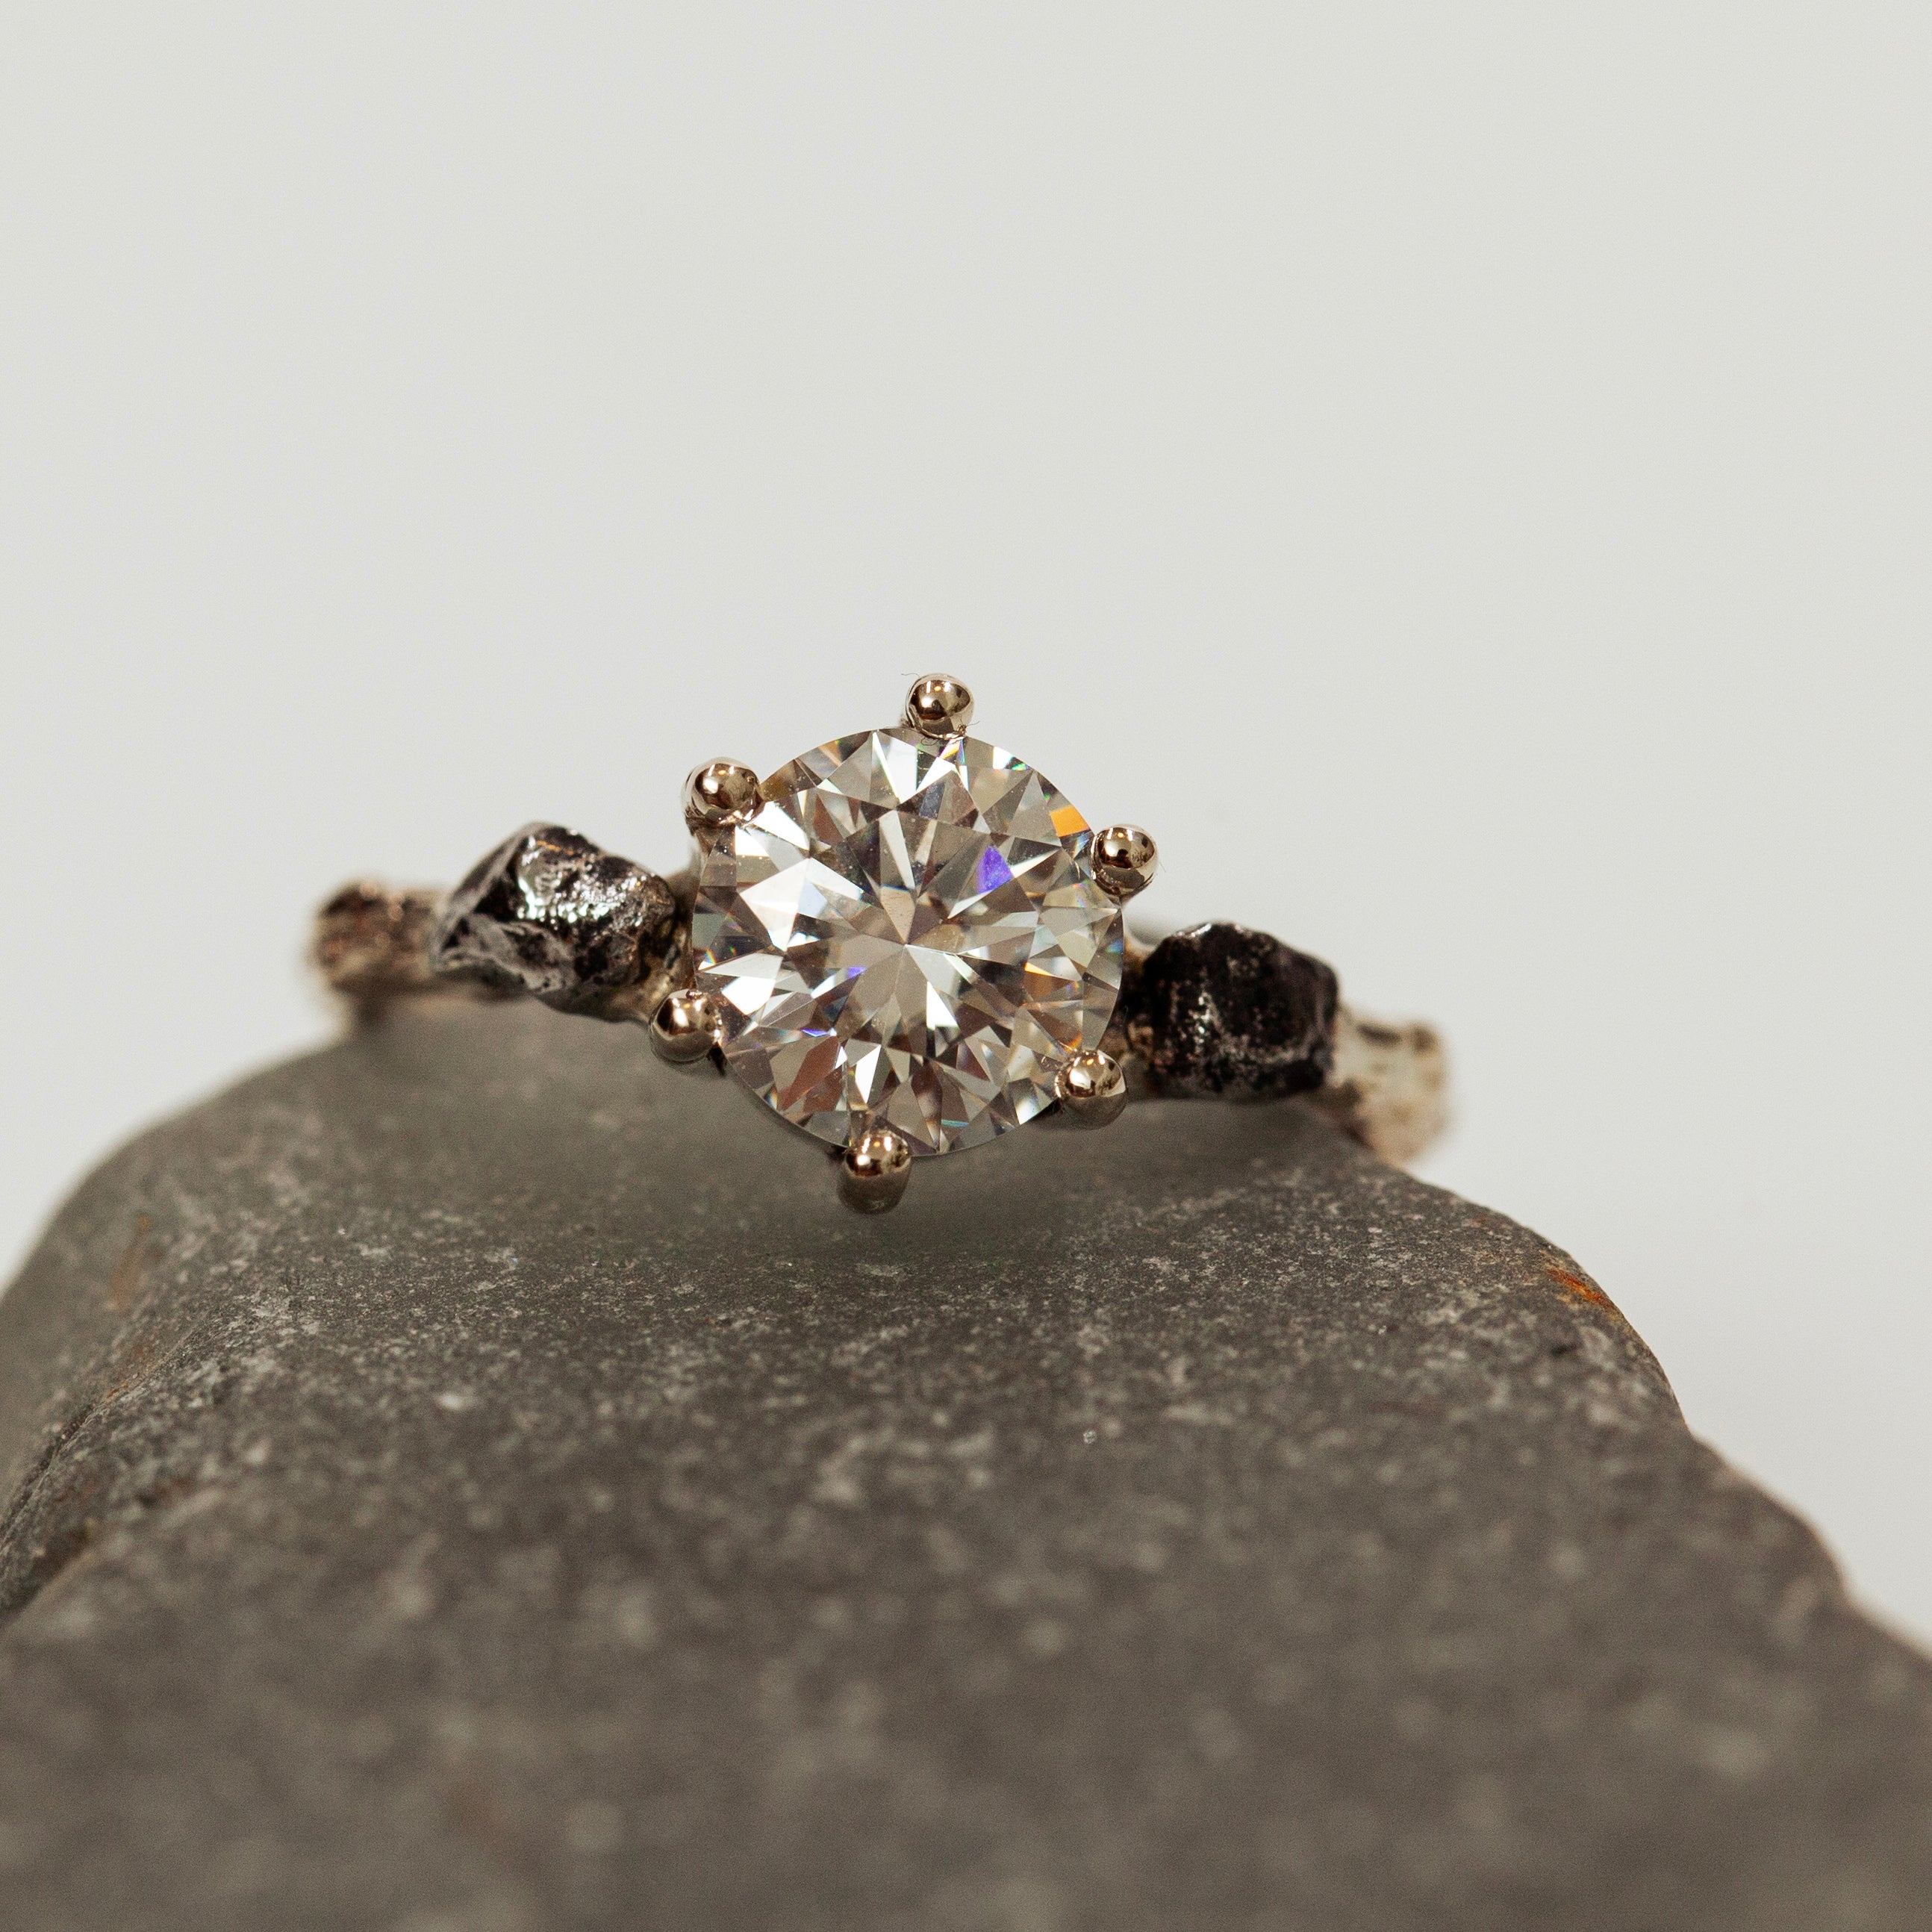 Impressive diamond branch and meteorite ring